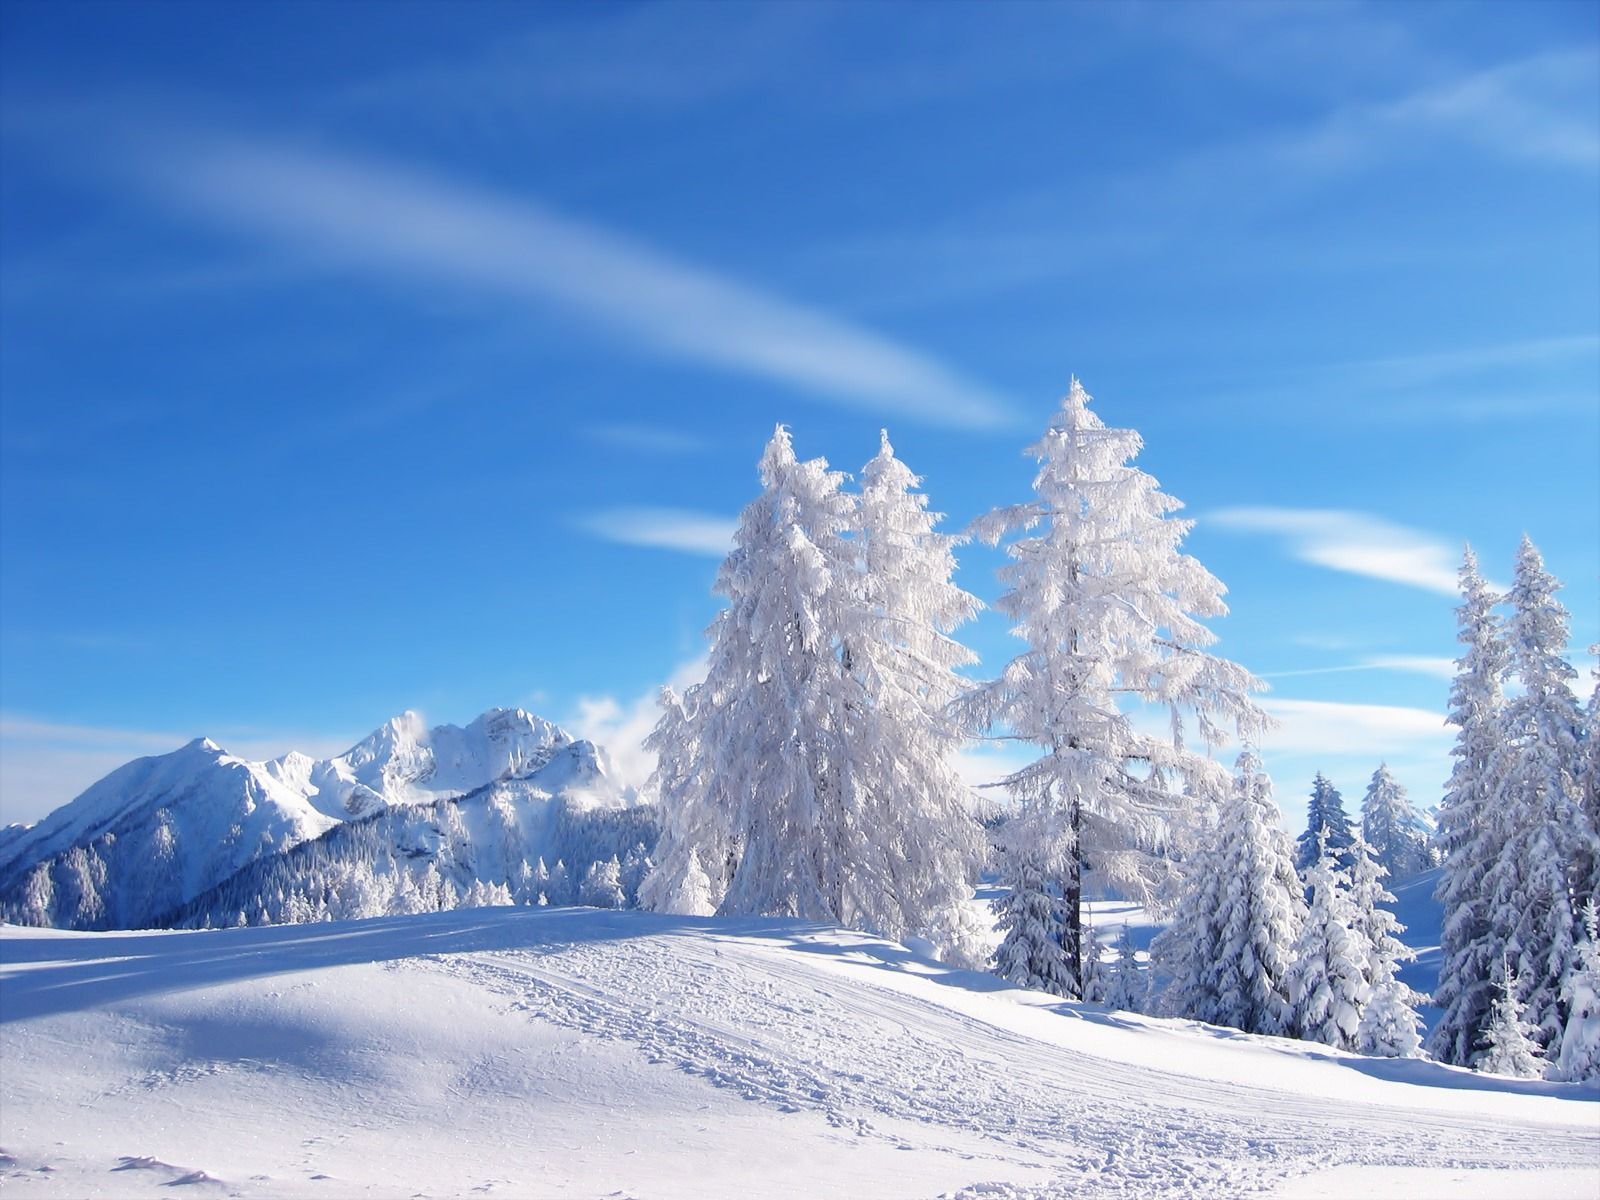 Winter Backgrounds for Desktop | Wallpapers, Backgrounds, Images ...